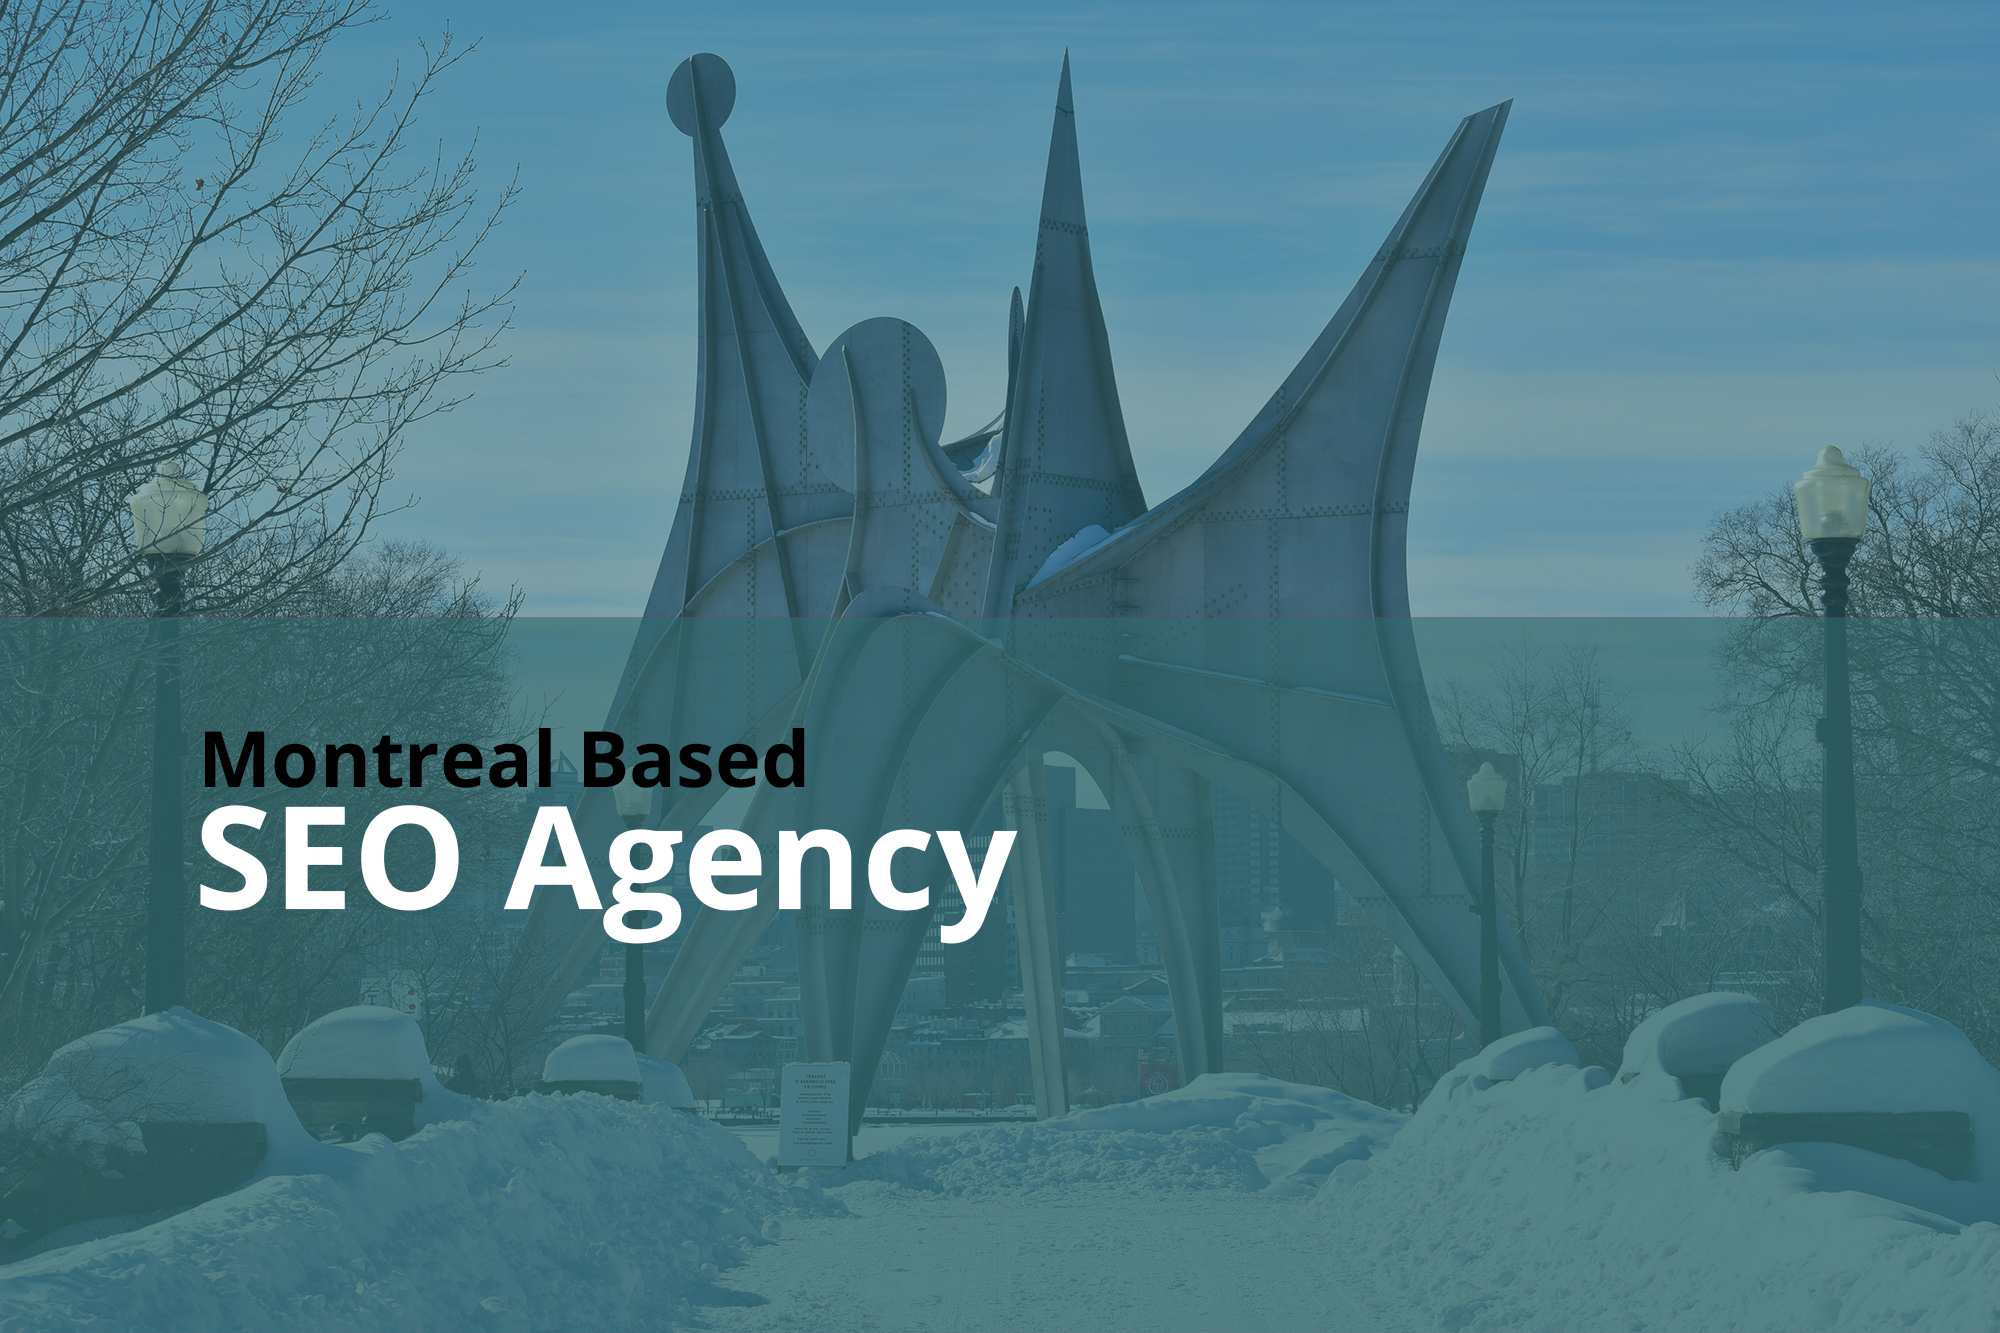 Montreal Based SEO Agency